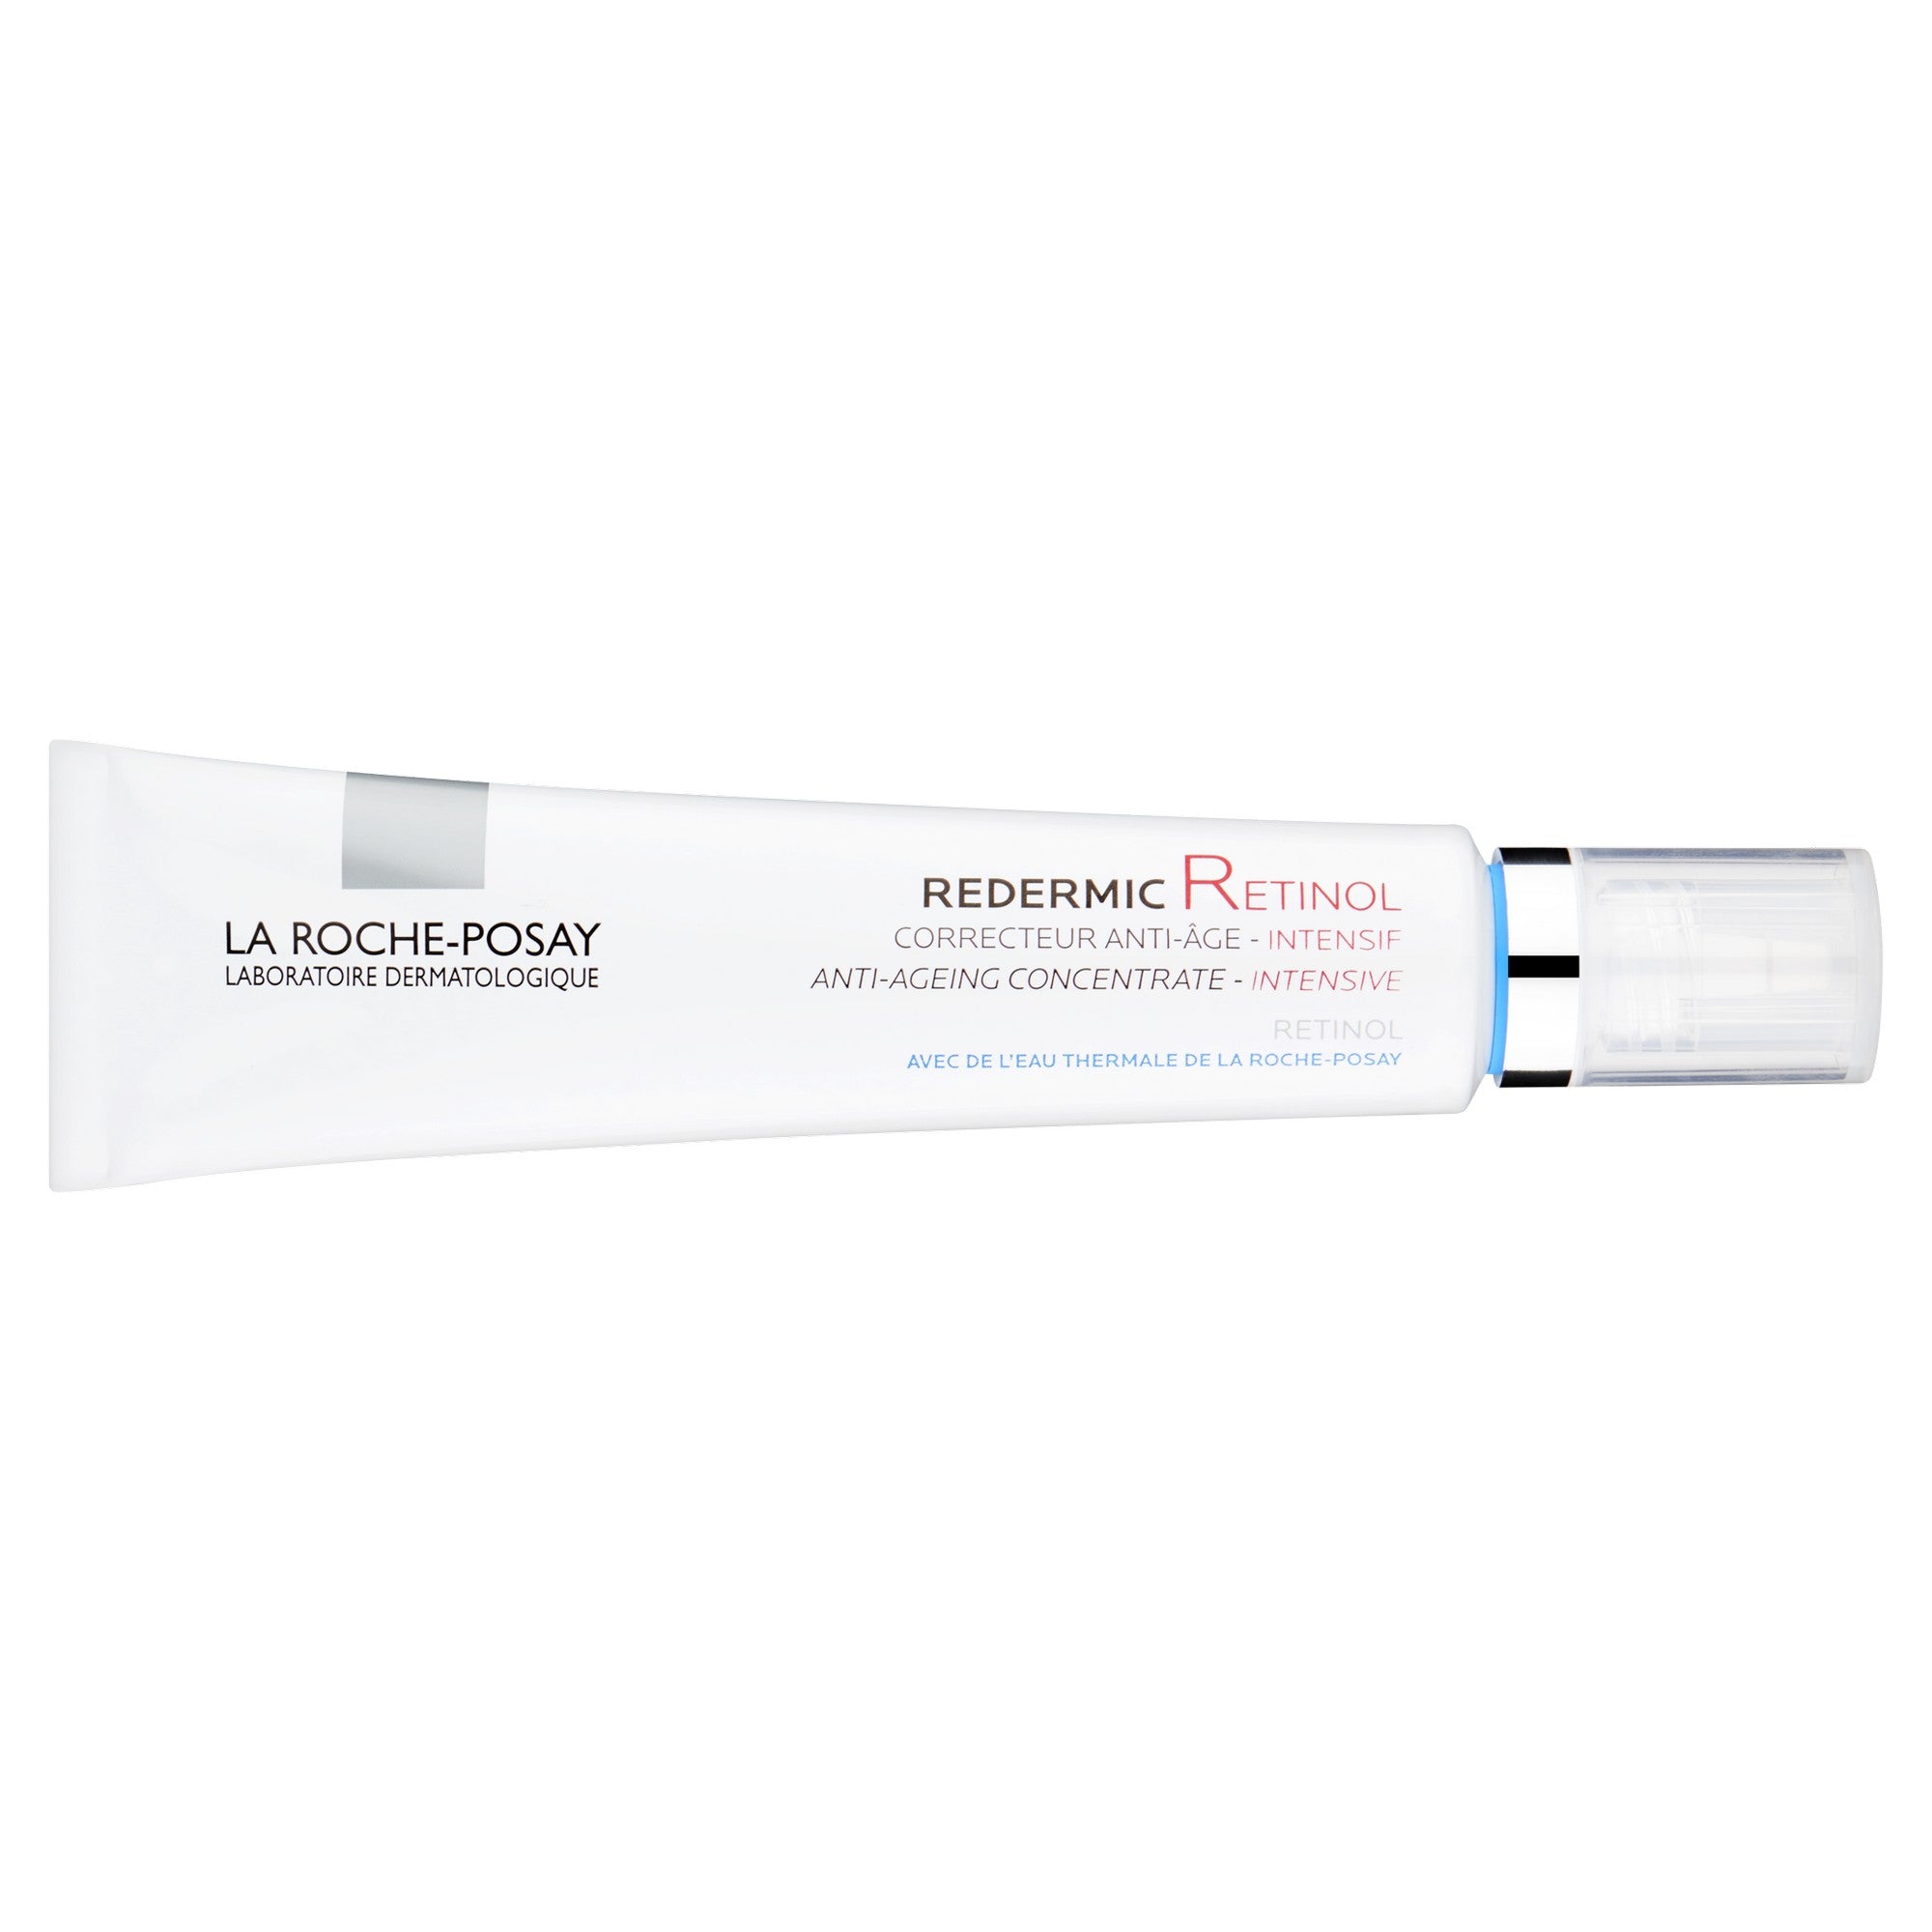 La Roche Posay Redermic Retinol 30ml tube